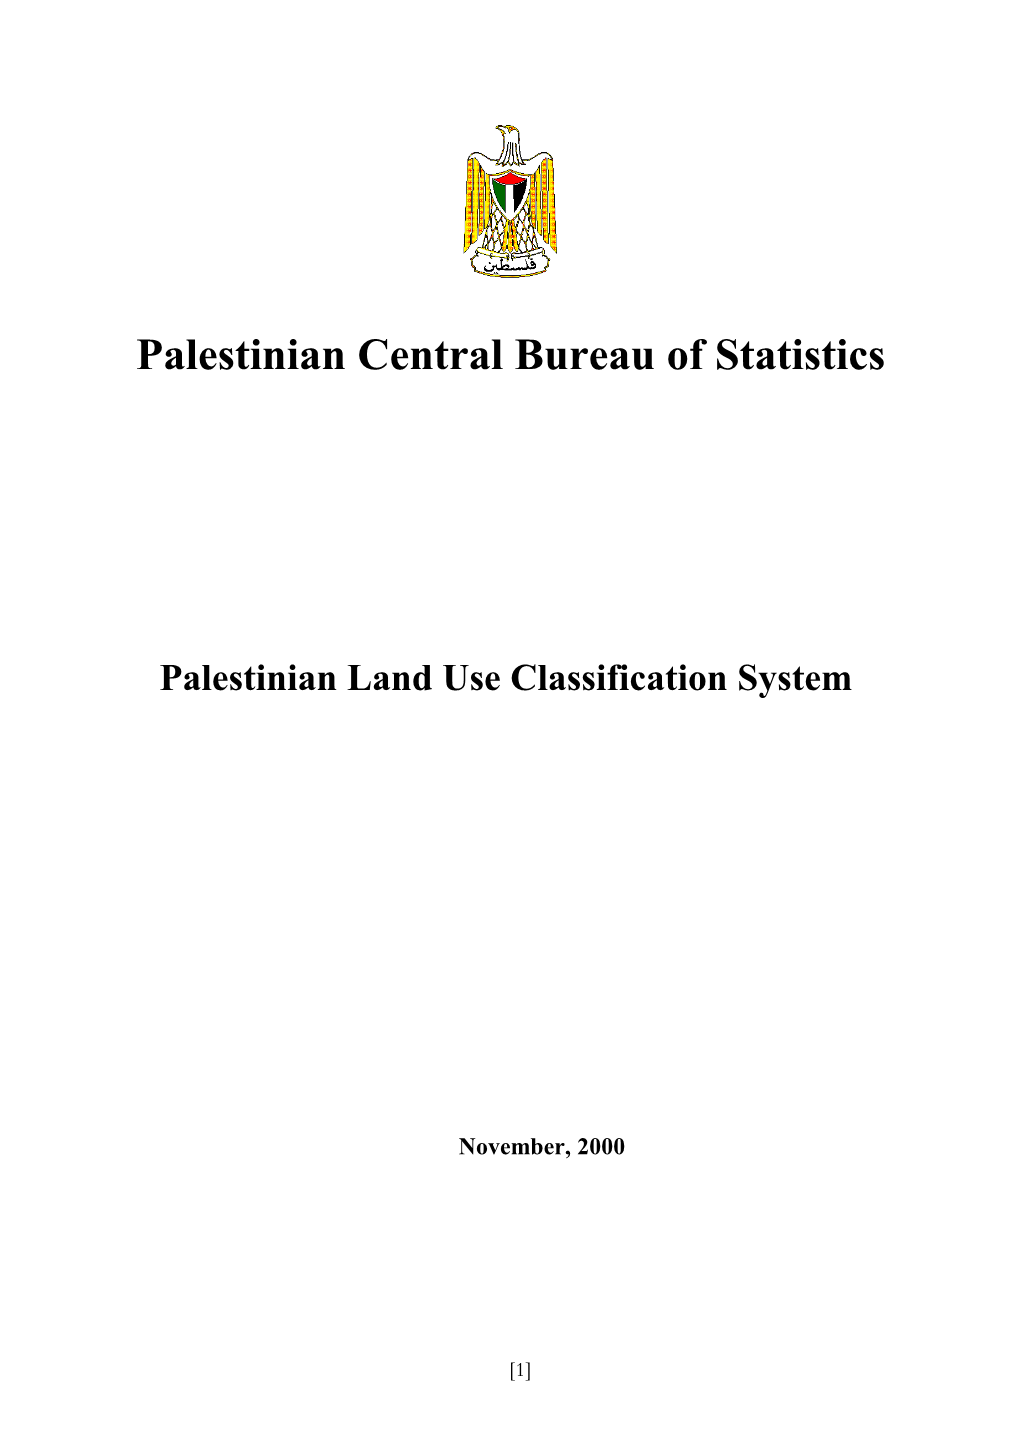 Report on Land Use Indicators on Palestinian Territory